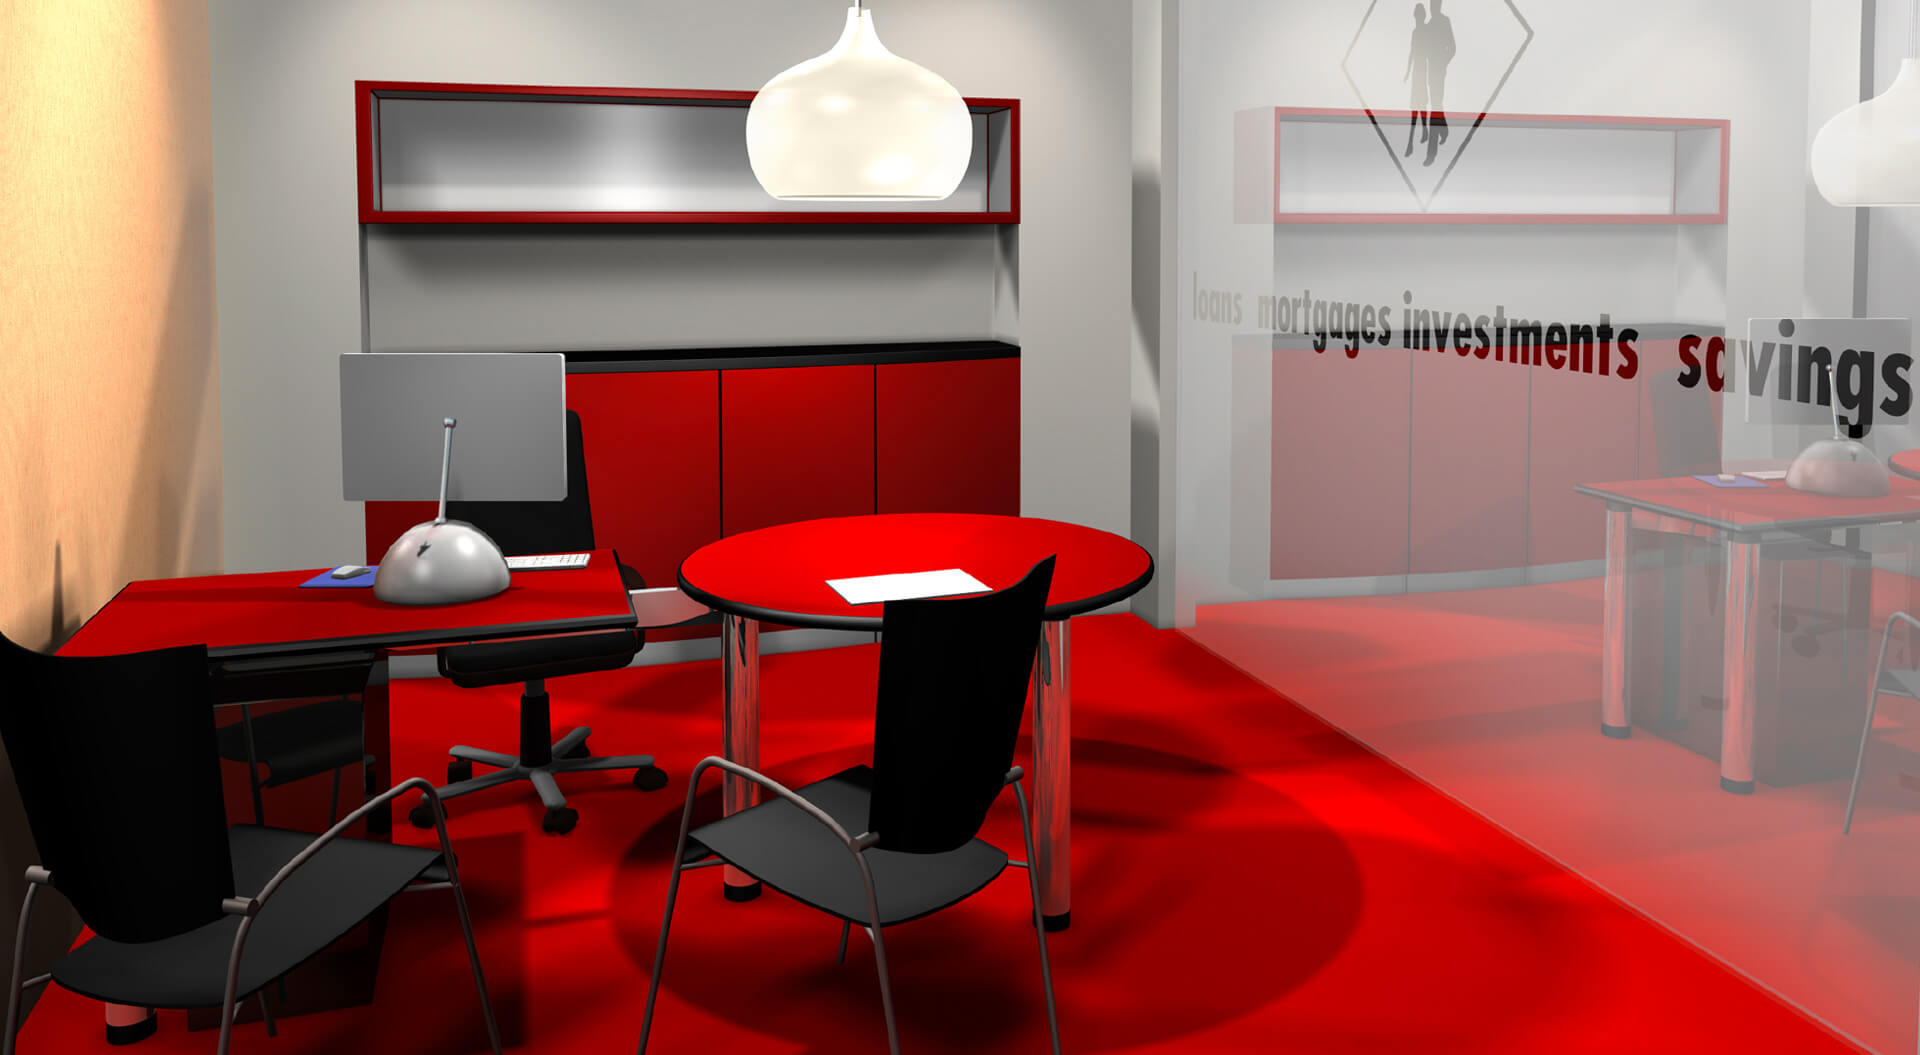 Abbey bank branch rebrand interior design interview rooms